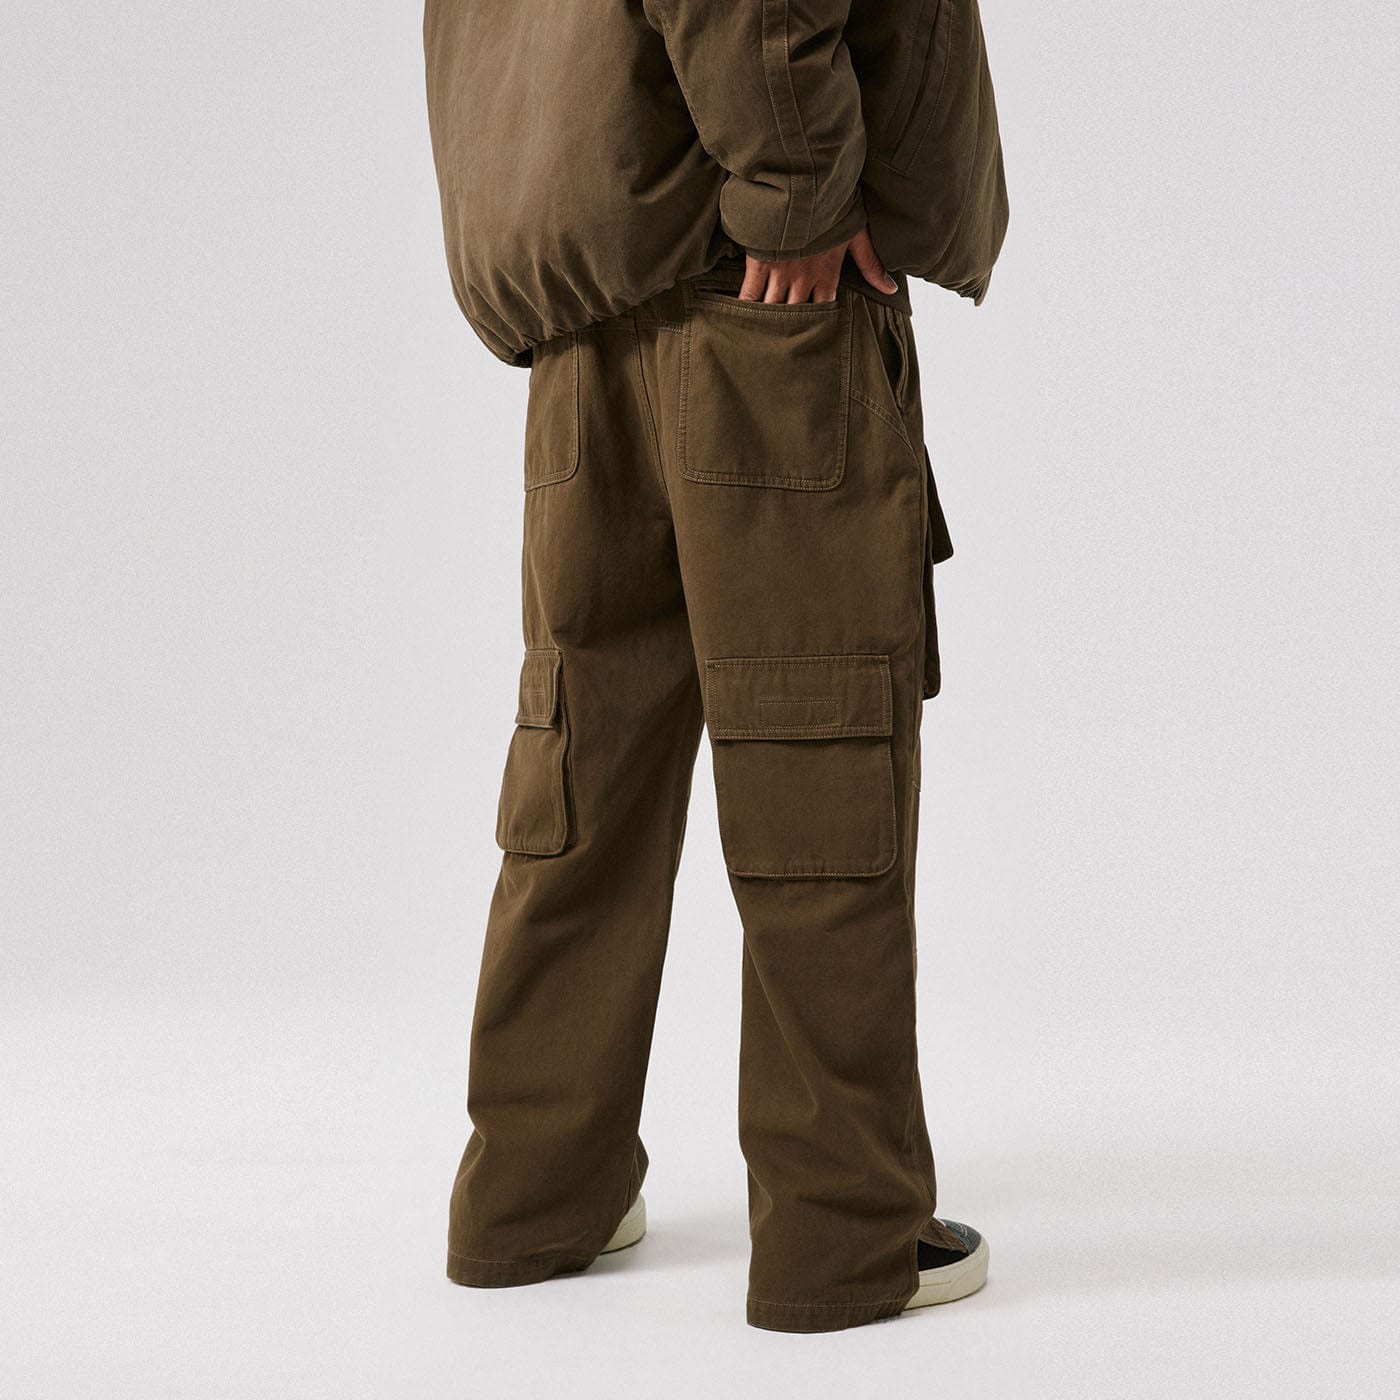 BONELESS Classic Cargo Pants, premium urban and streetwear designers apparel on PROJECTISR.com, BONELESS